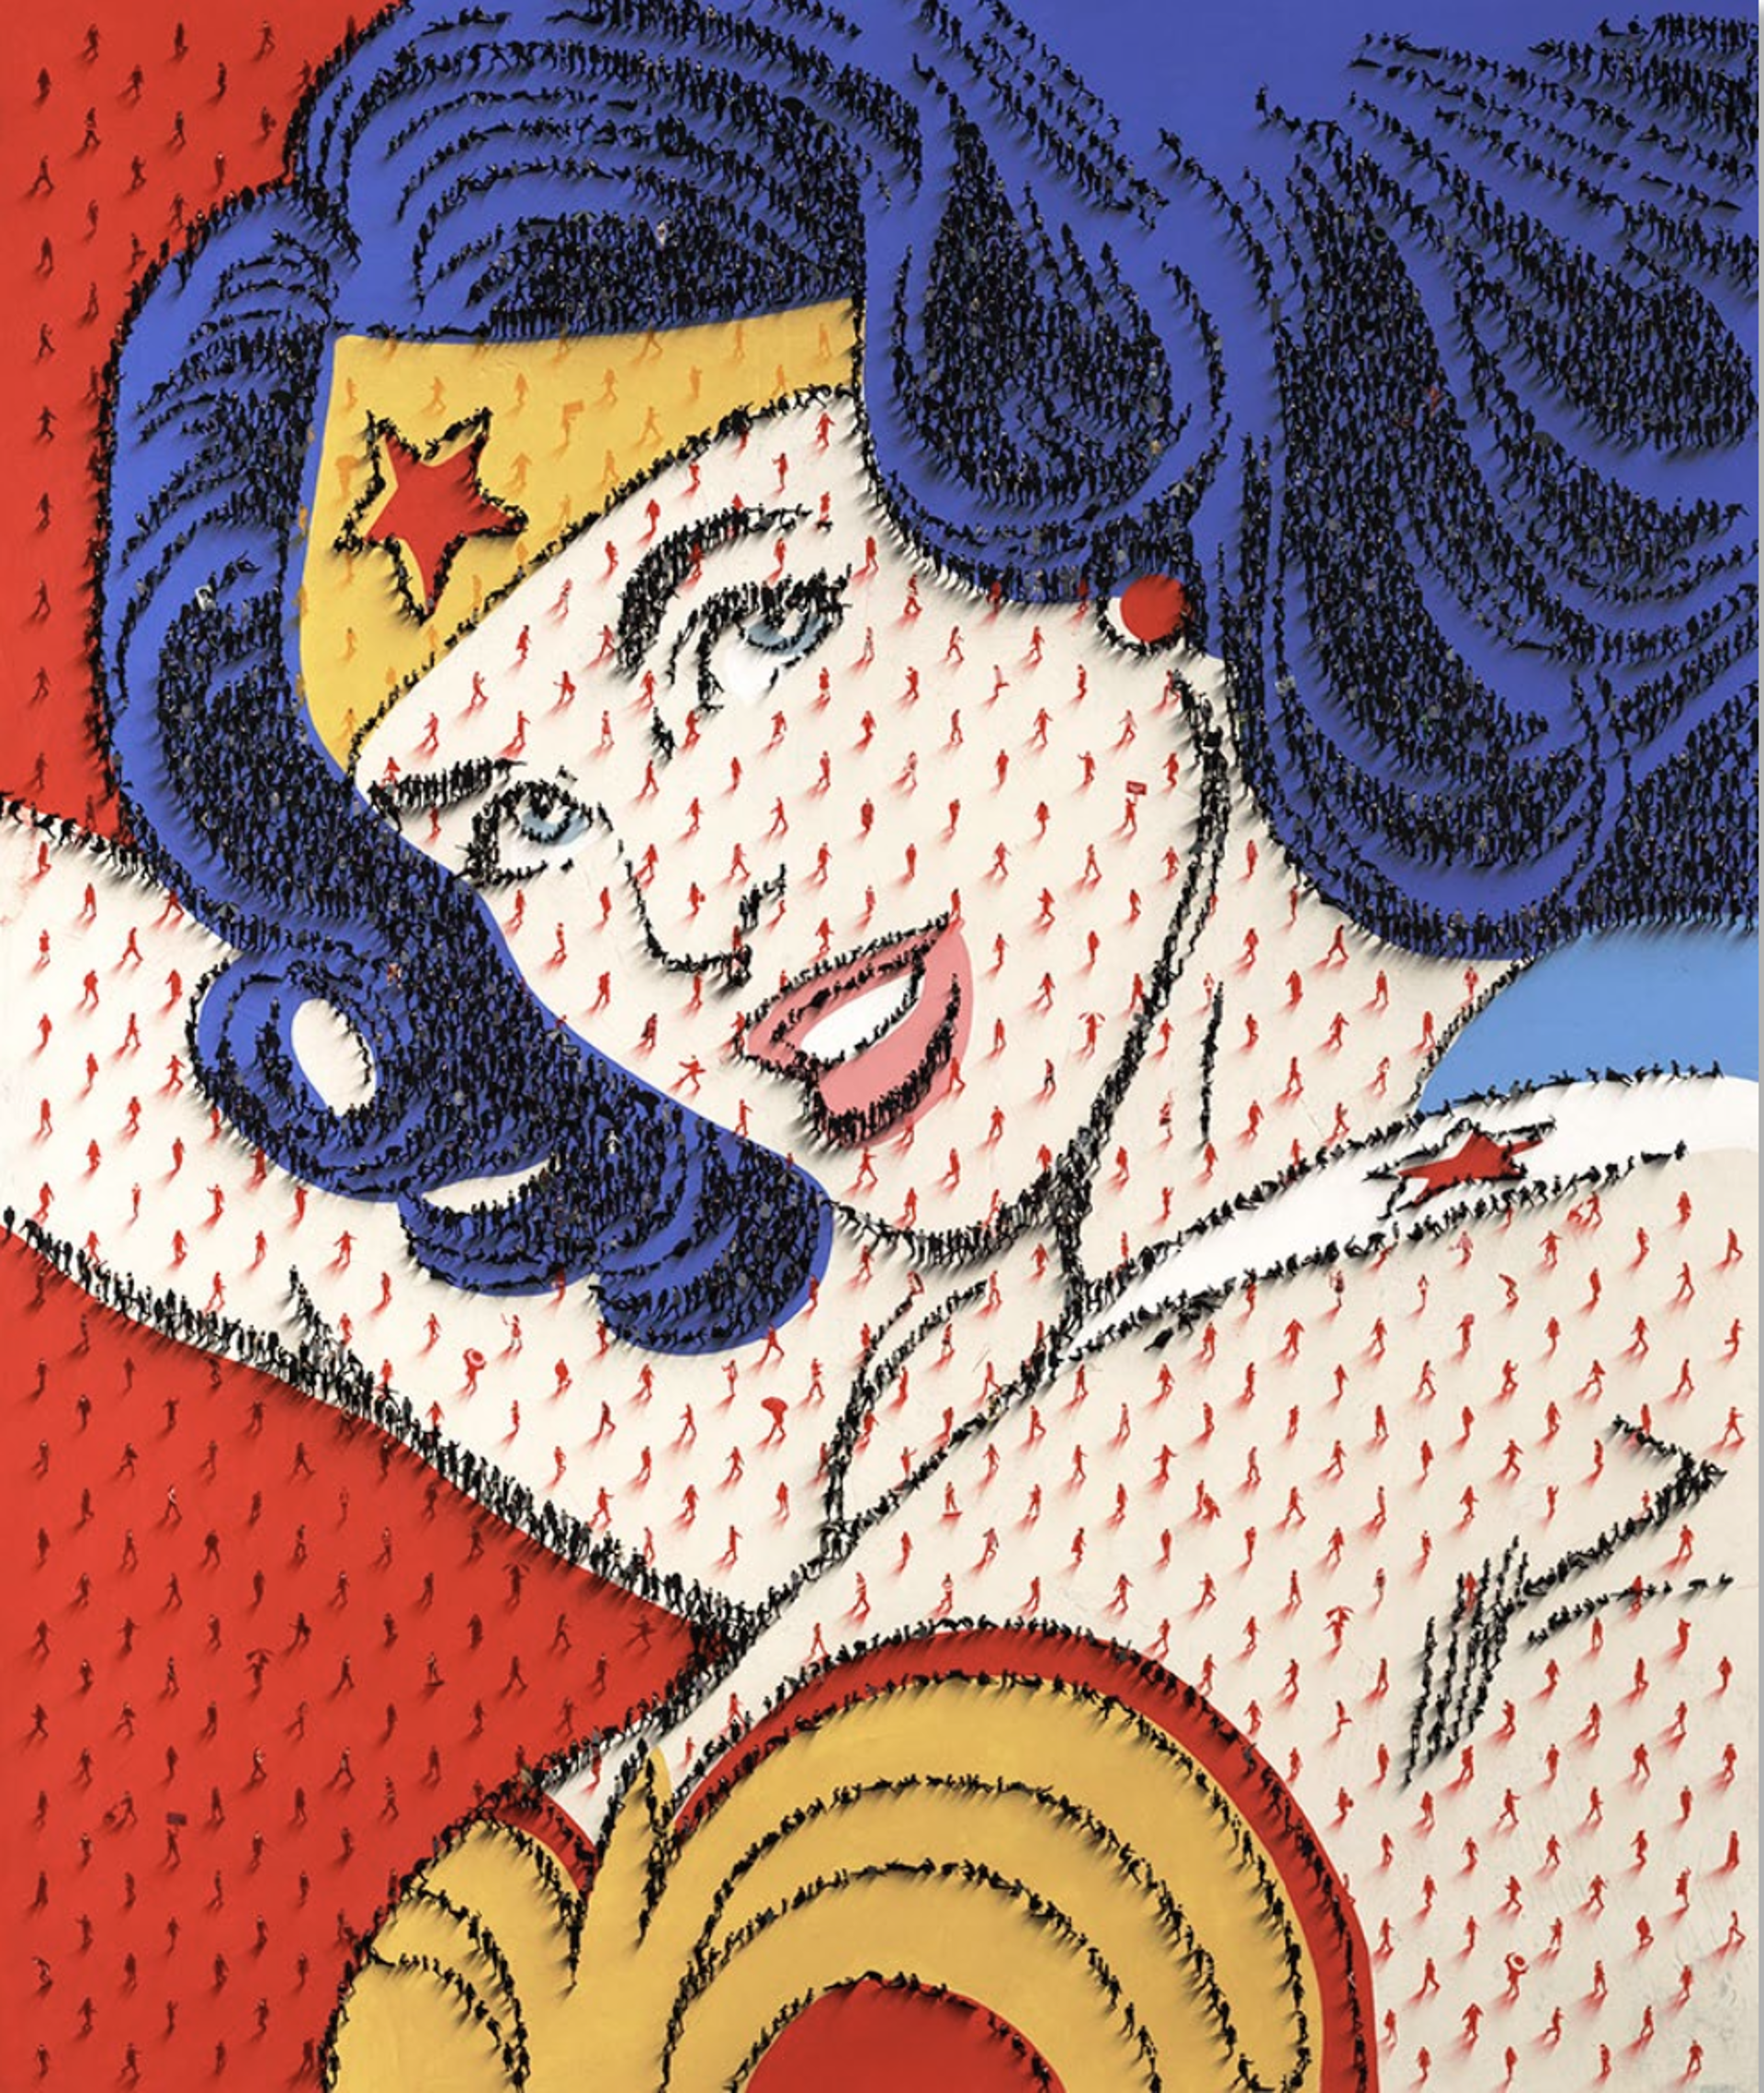 Heroes Among Us (Wonder Woman) by Craig Alan